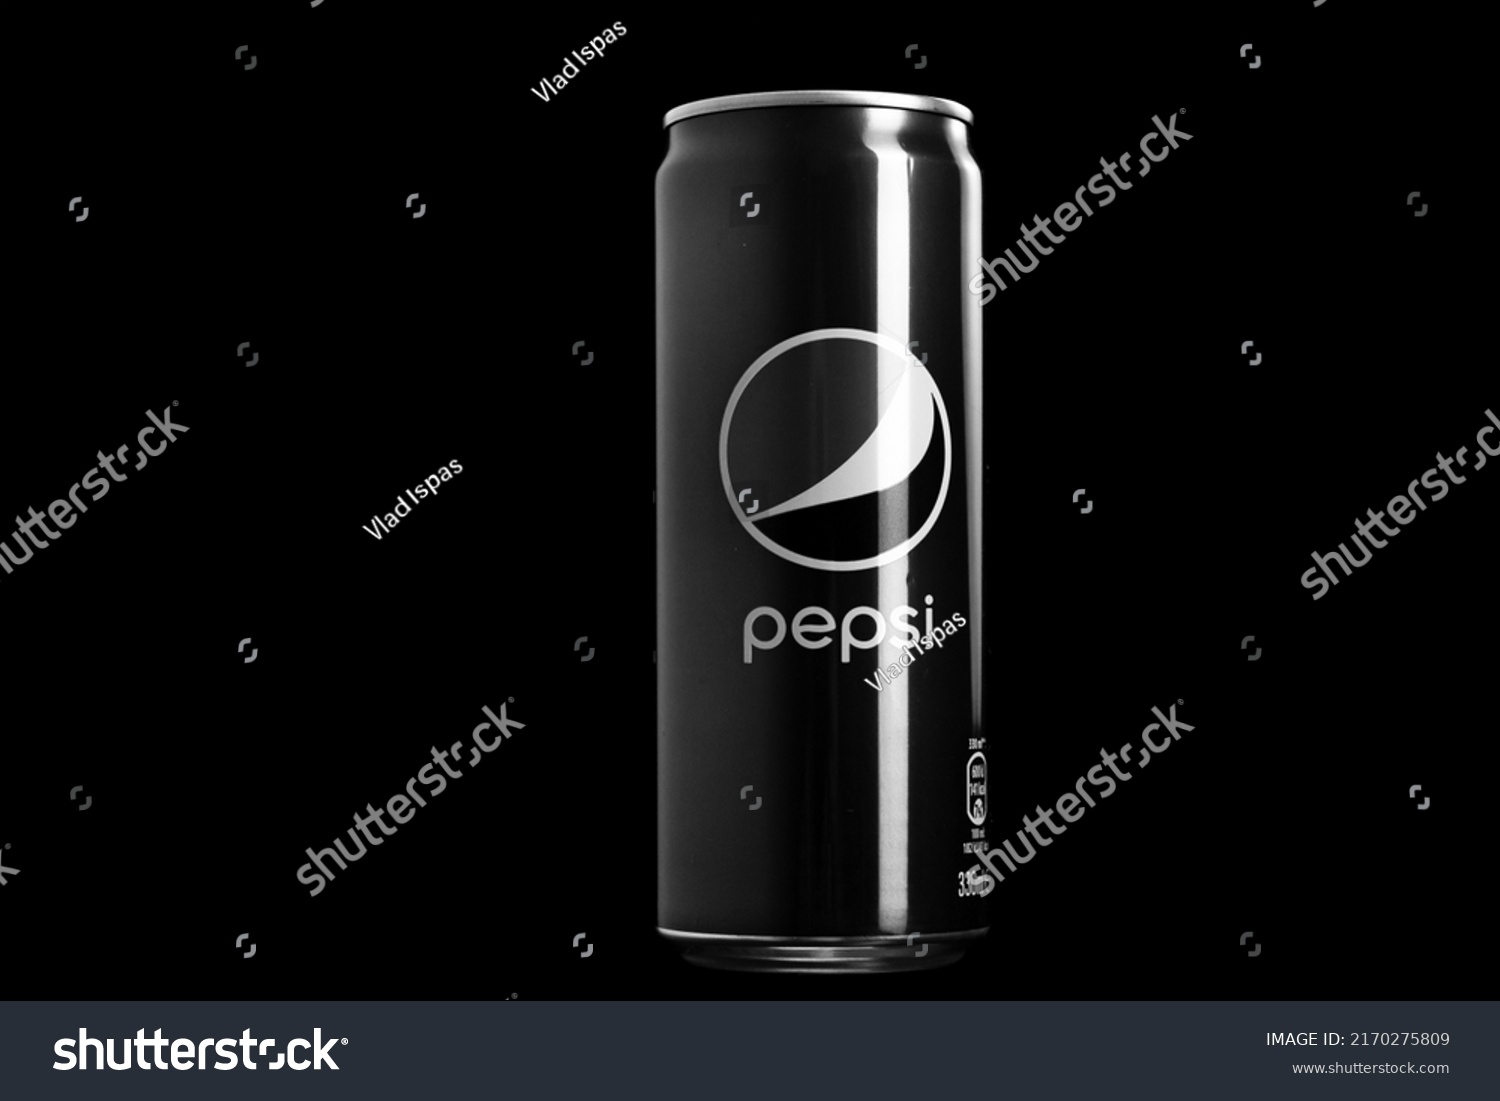 Classic Pepsi Can Pepsi Soft Drink Stock Photo 2170275809 | Shutterstock